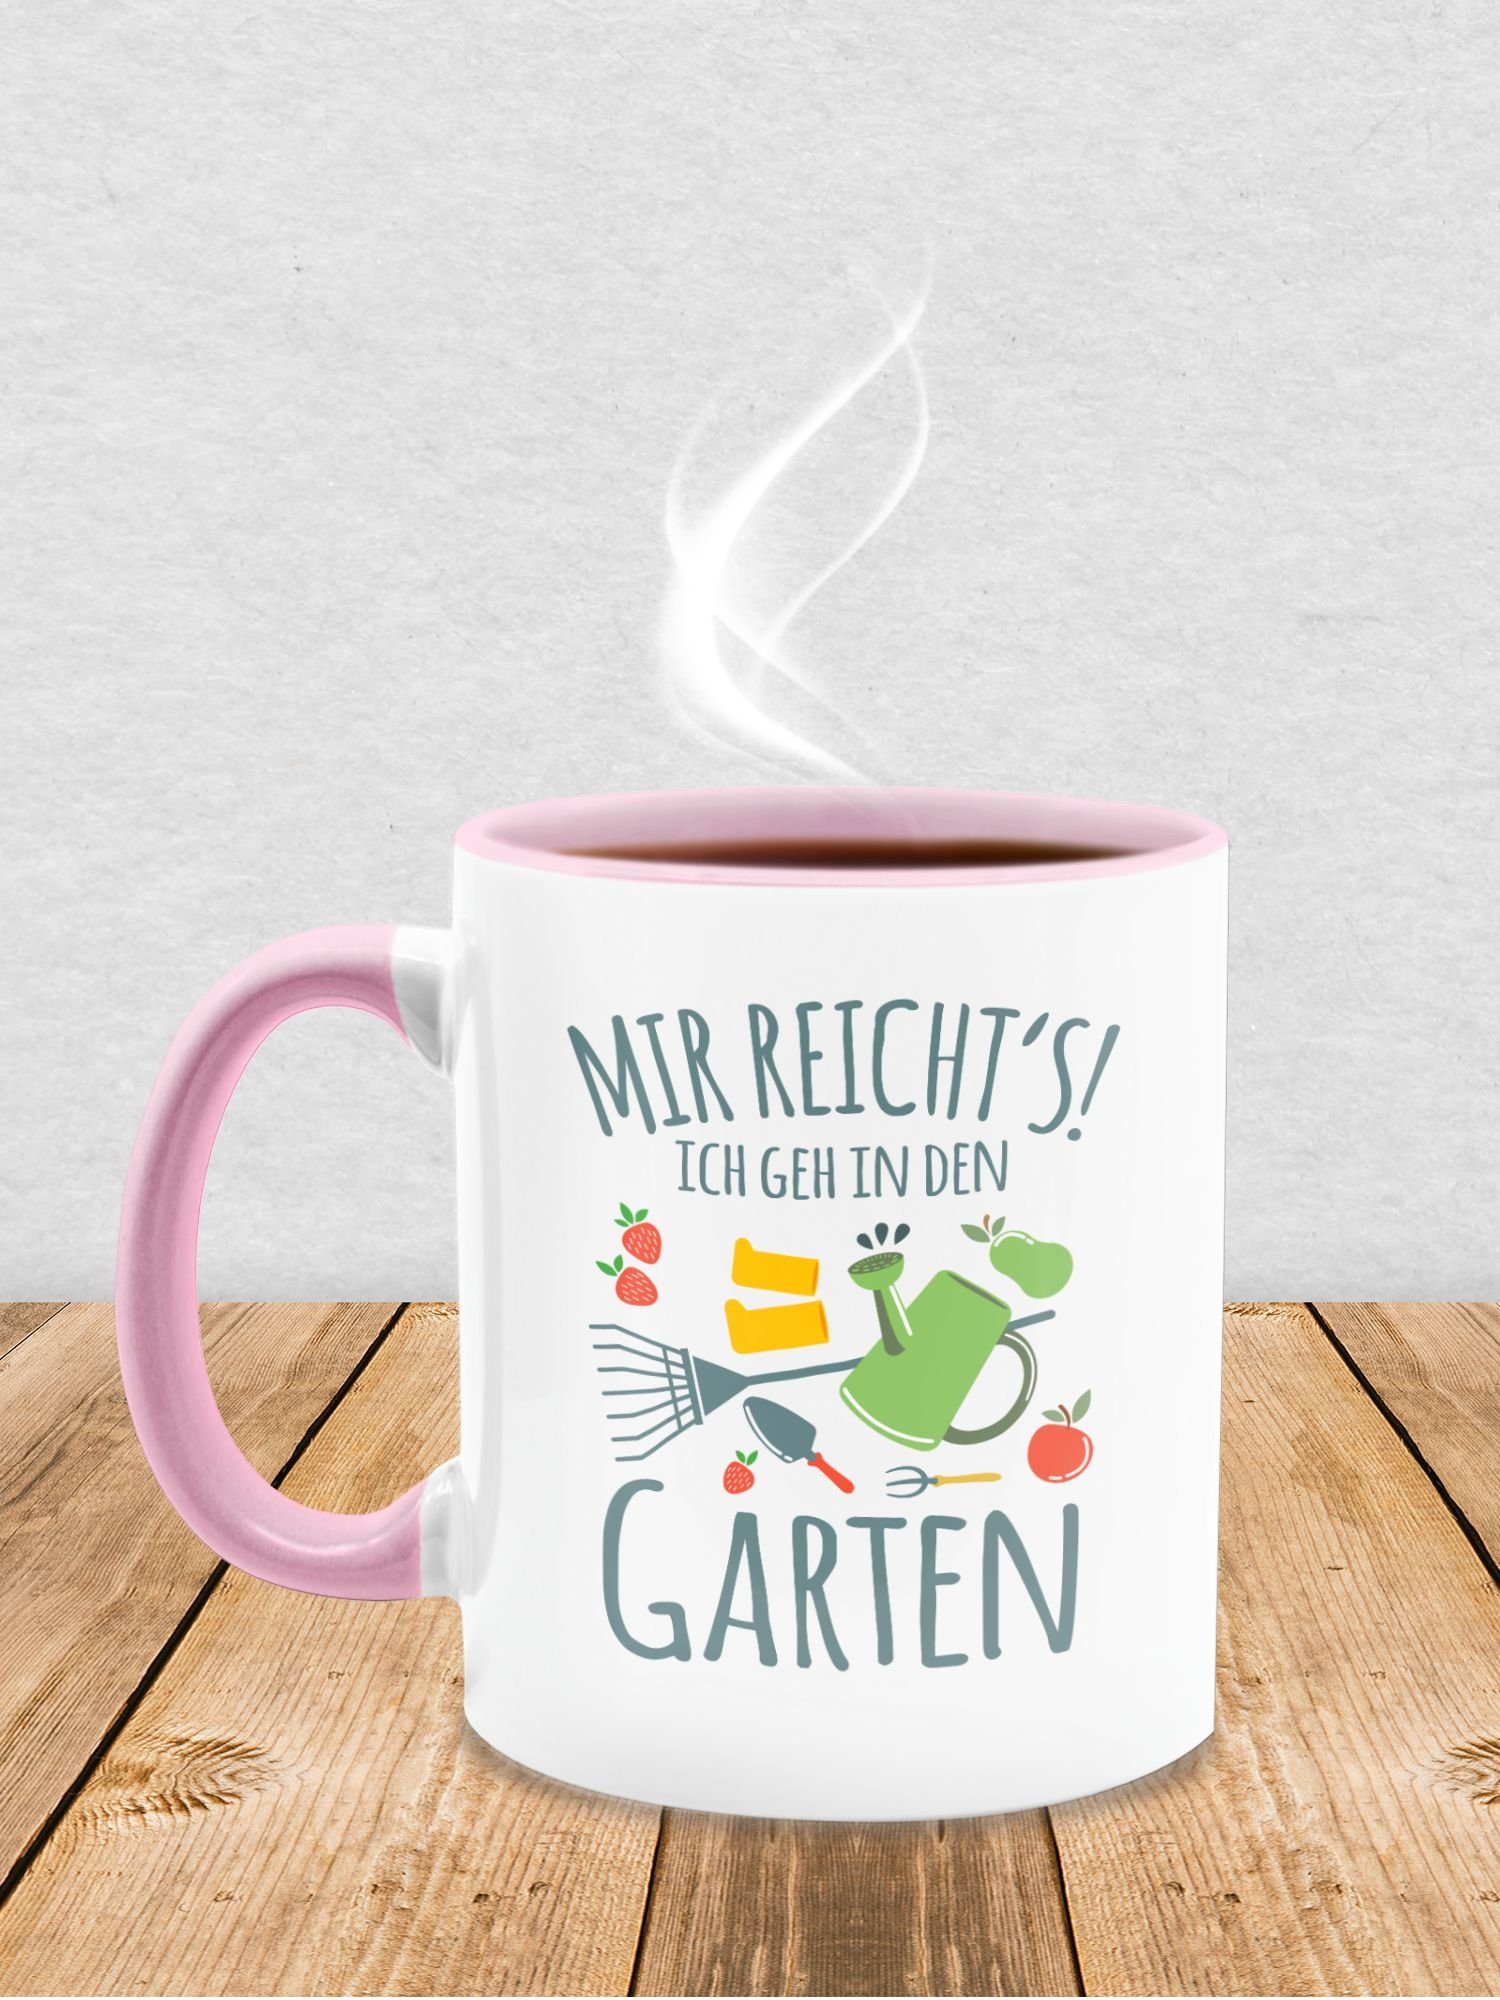 Mir reicht's geh Hobby Kaffeetasse Rosa ich in Shirtracer 3 Keramik, Garten, den Tasse Geschenk